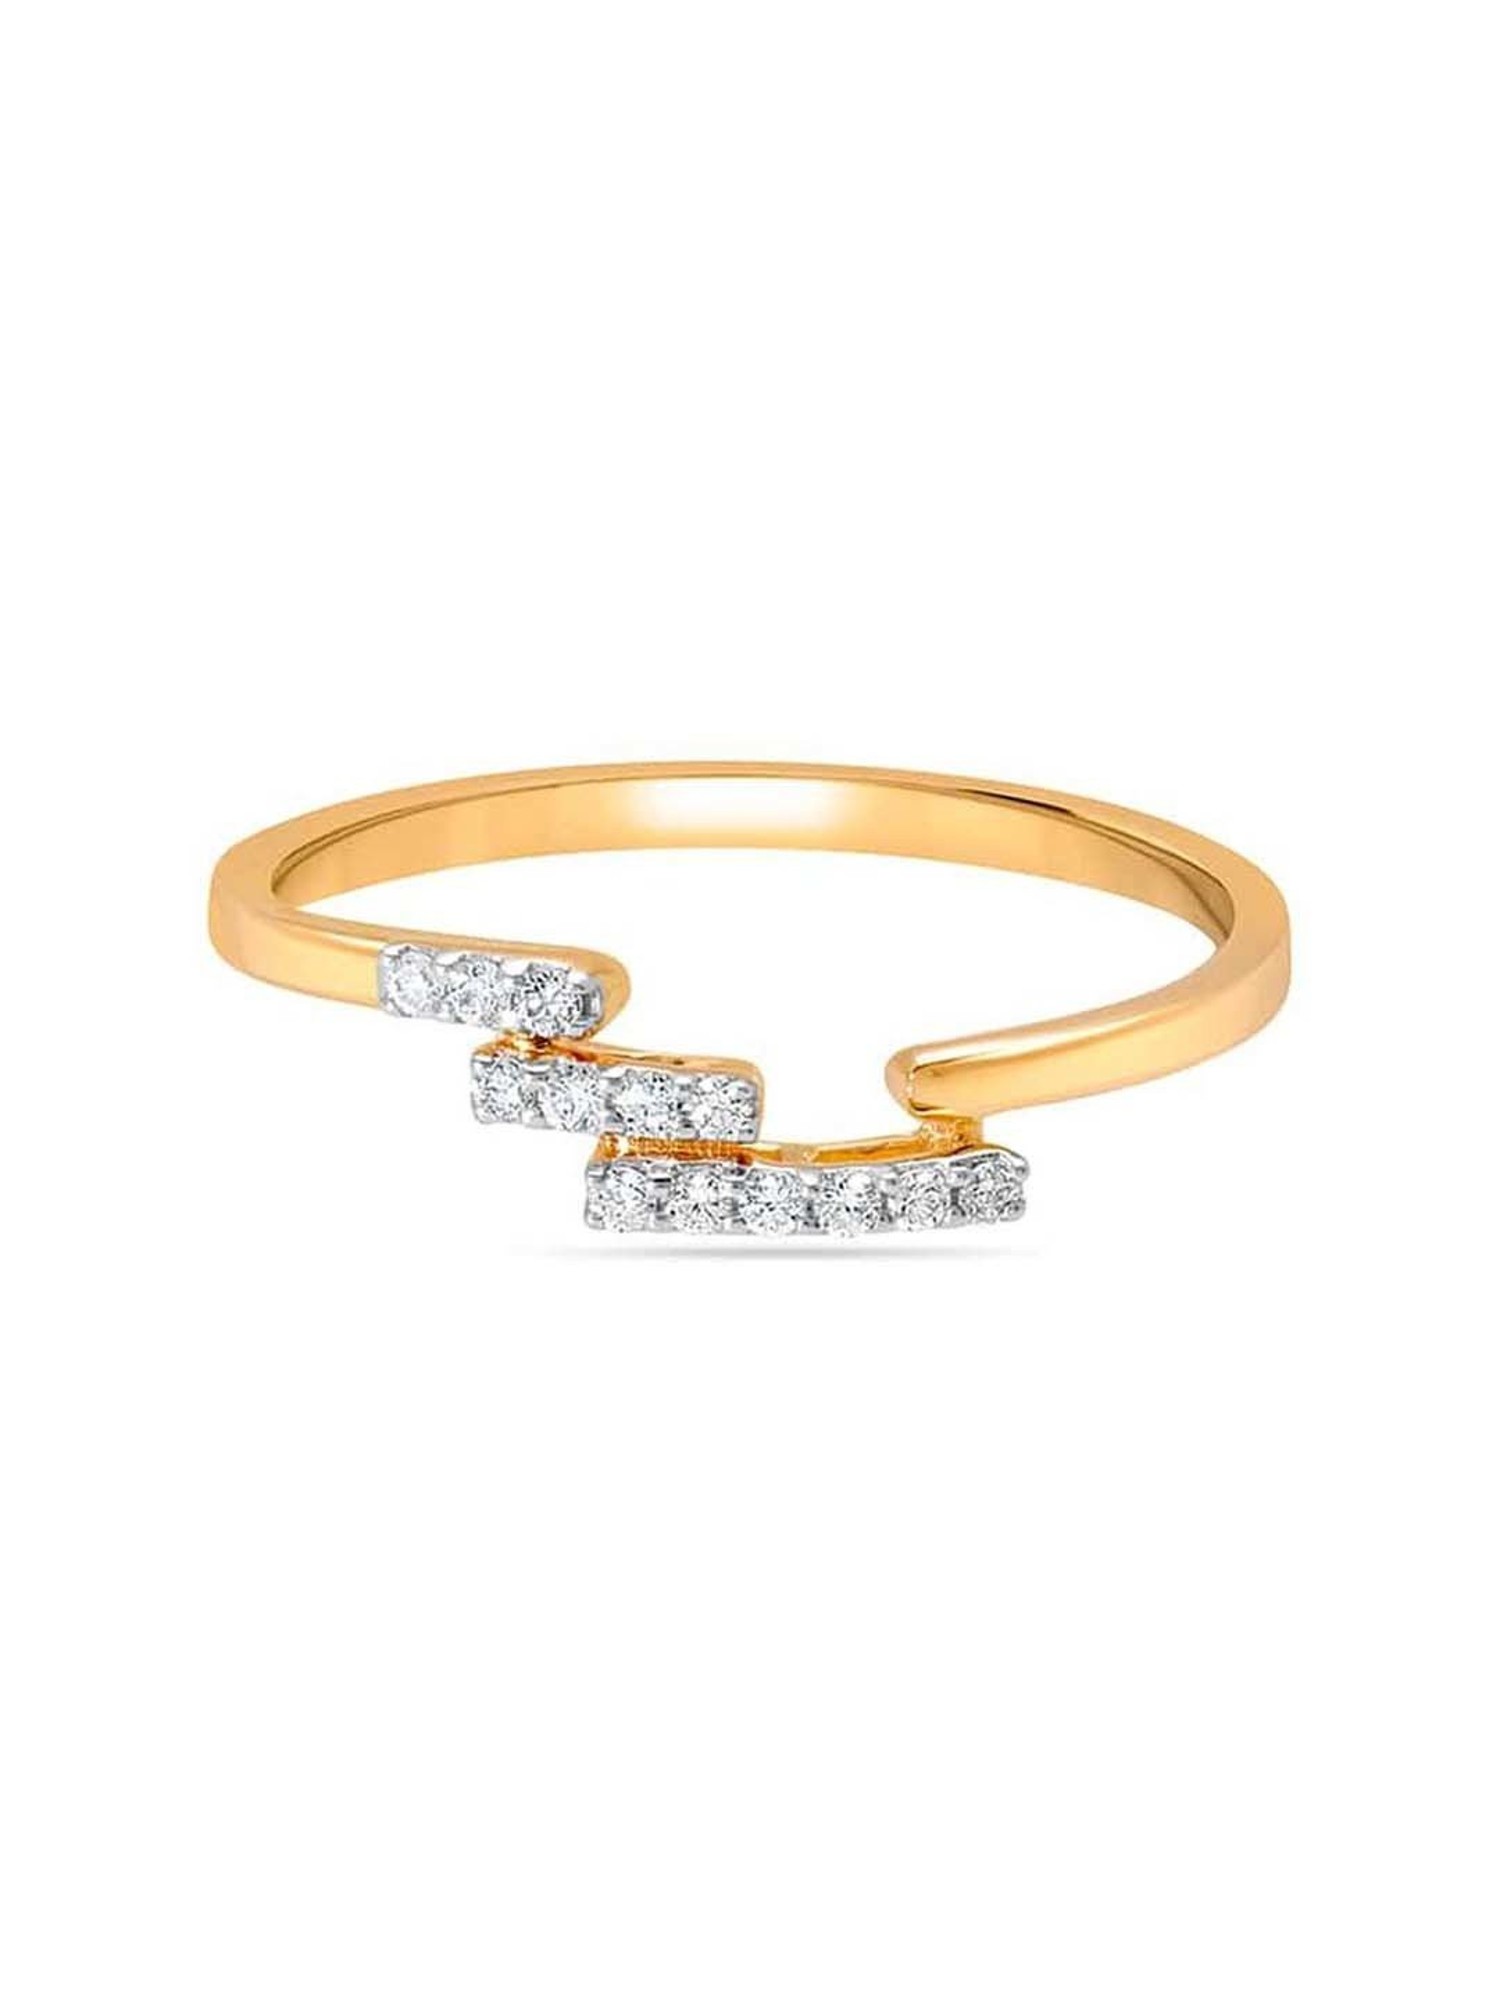 Luxury Tanishq Diamond Ring Prices For Men Atmosphere Naked Stone Full Diamond  Tanishq Diamond Ring Price Fashion Domineetanishq Diamond Ring Price Micro  Encrusted Diamond Mens Tanishq Diamond Ring Price From Huierjew, $4.33 |